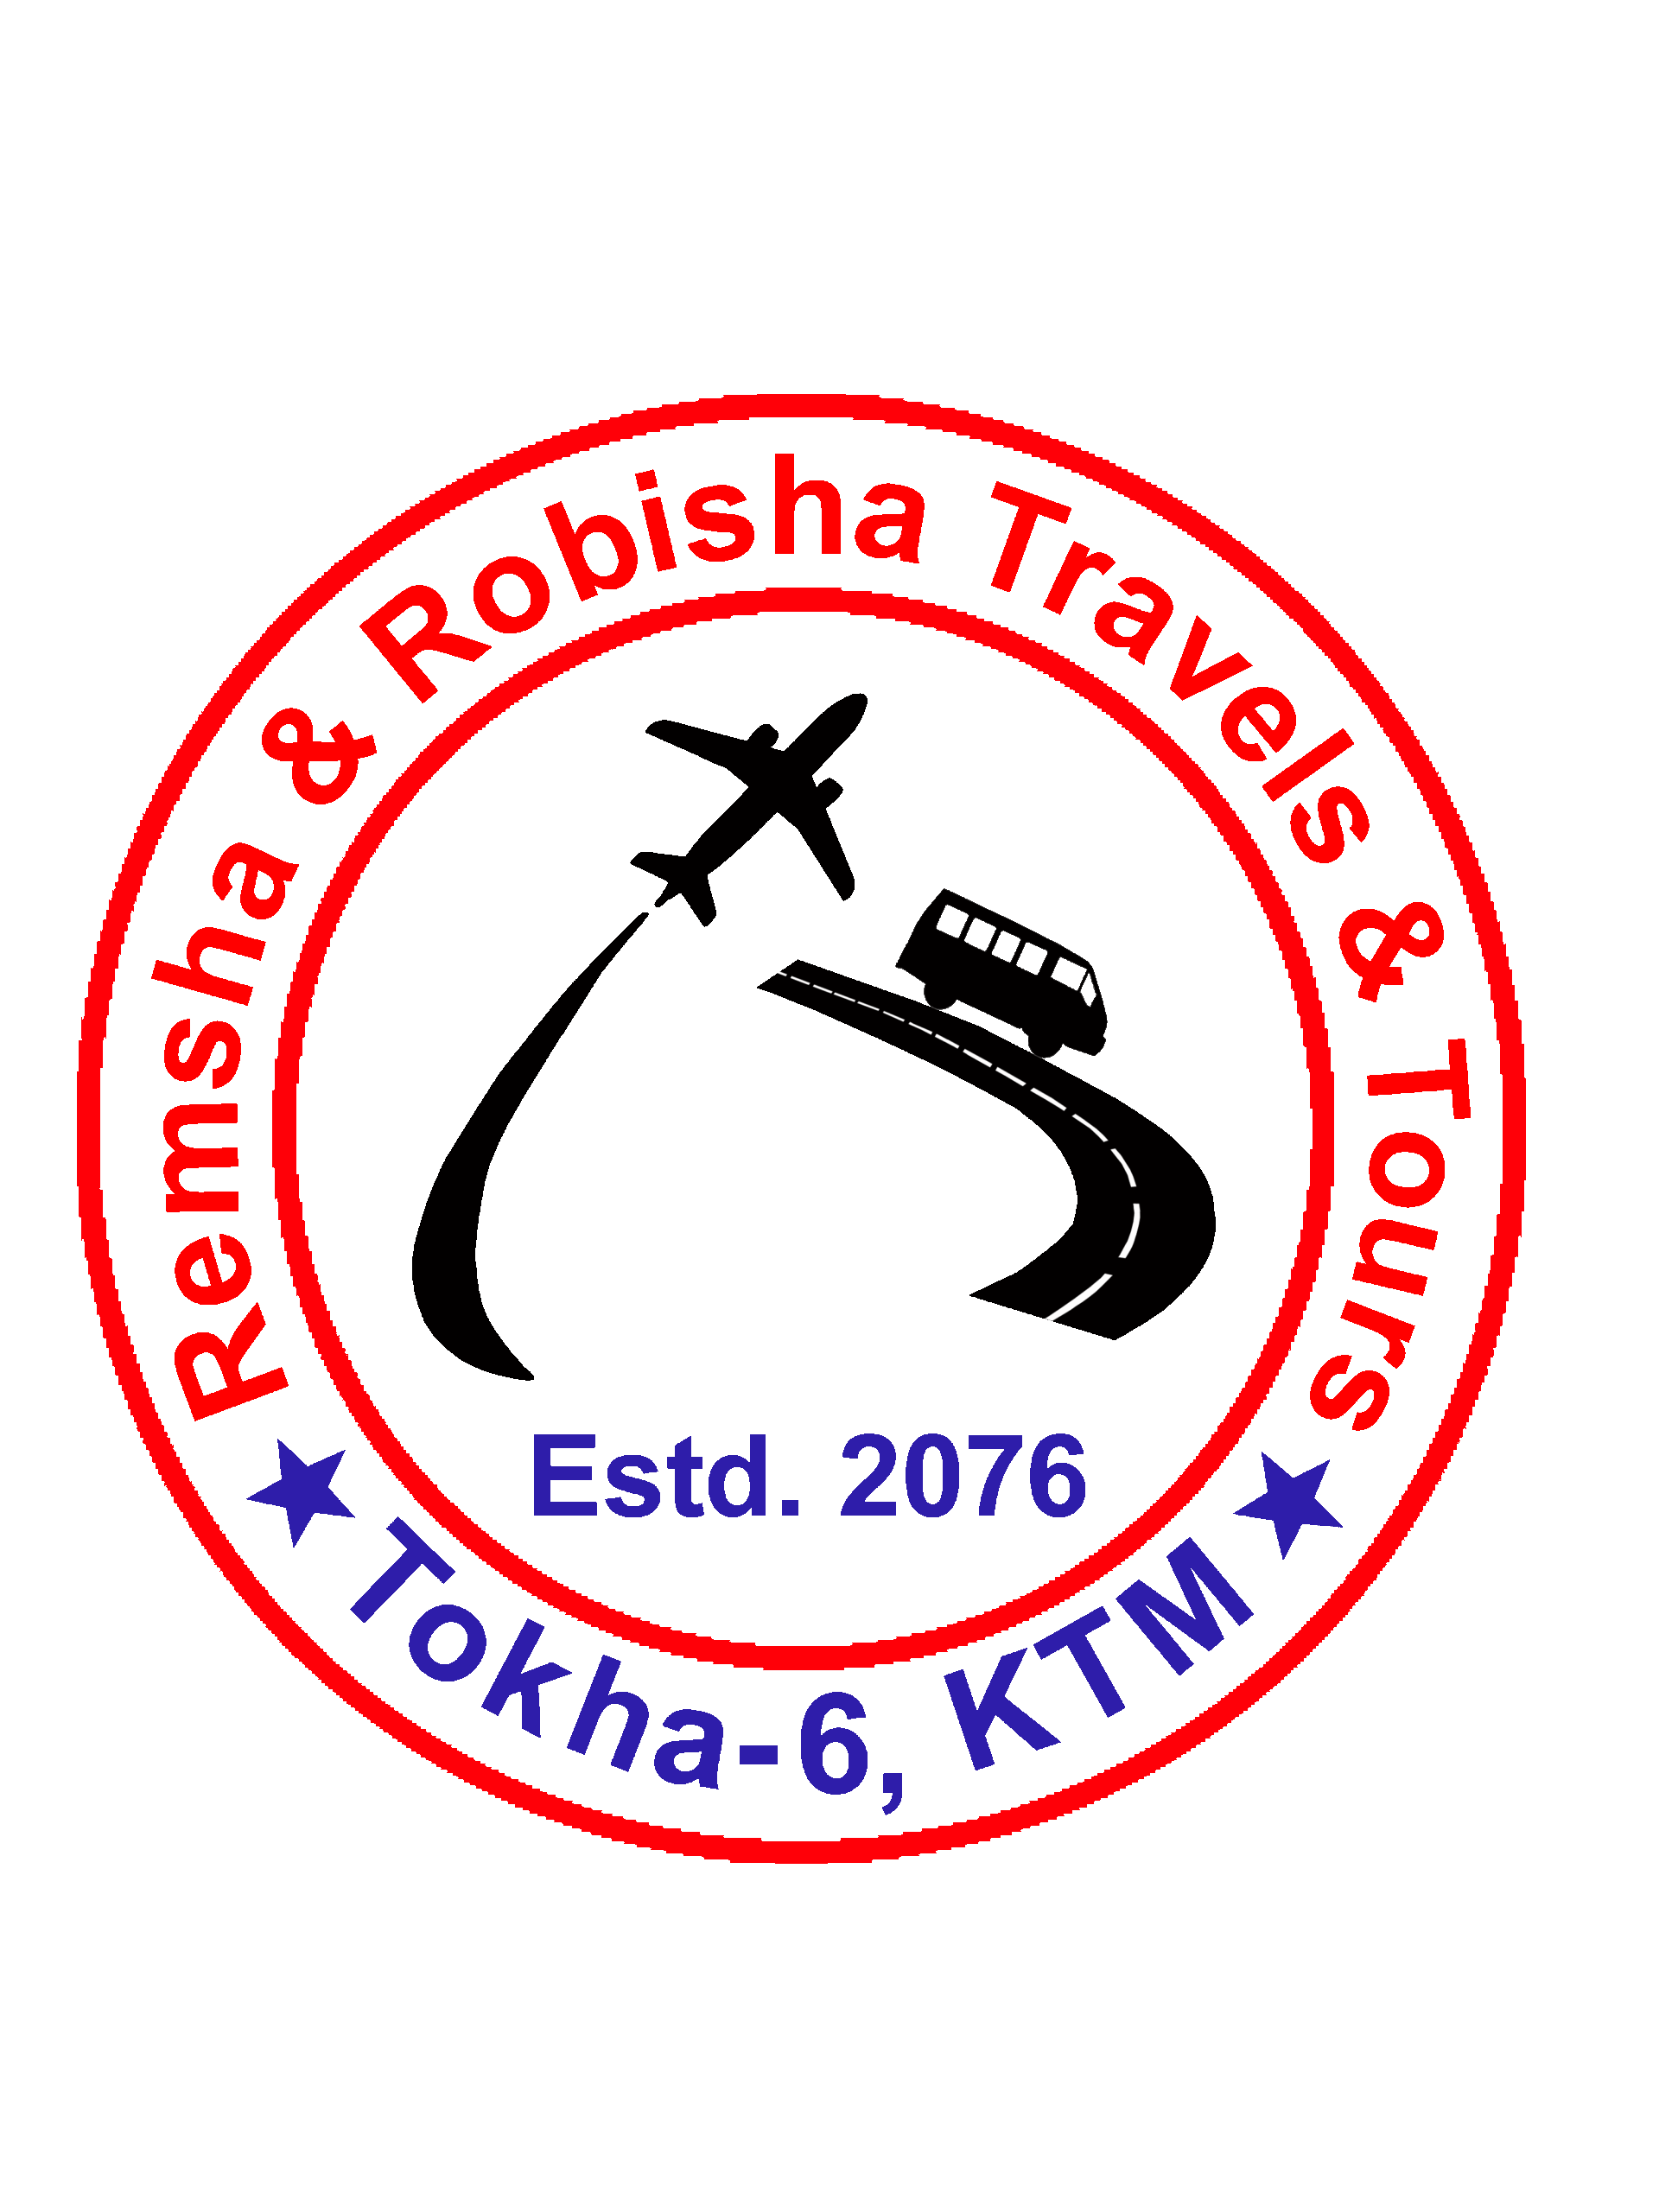 Remsha & Robisha Travel & Tours Nepal